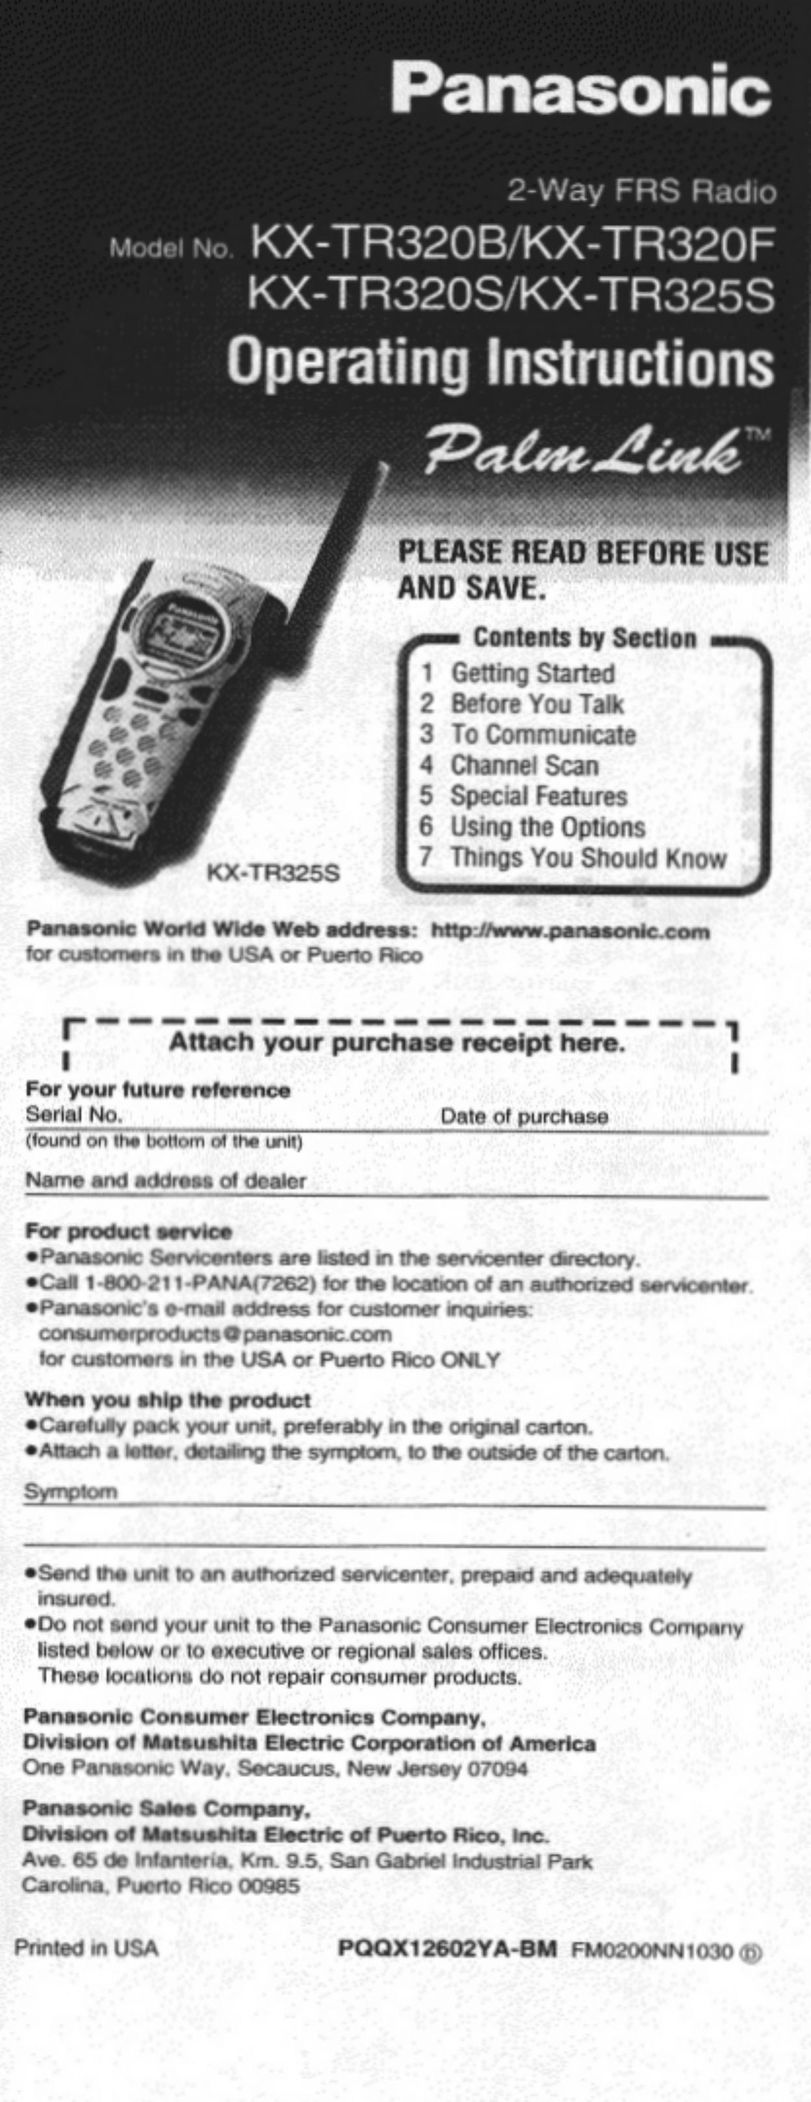 Panasonic KX-TR325S Two-Way Radio User Manual